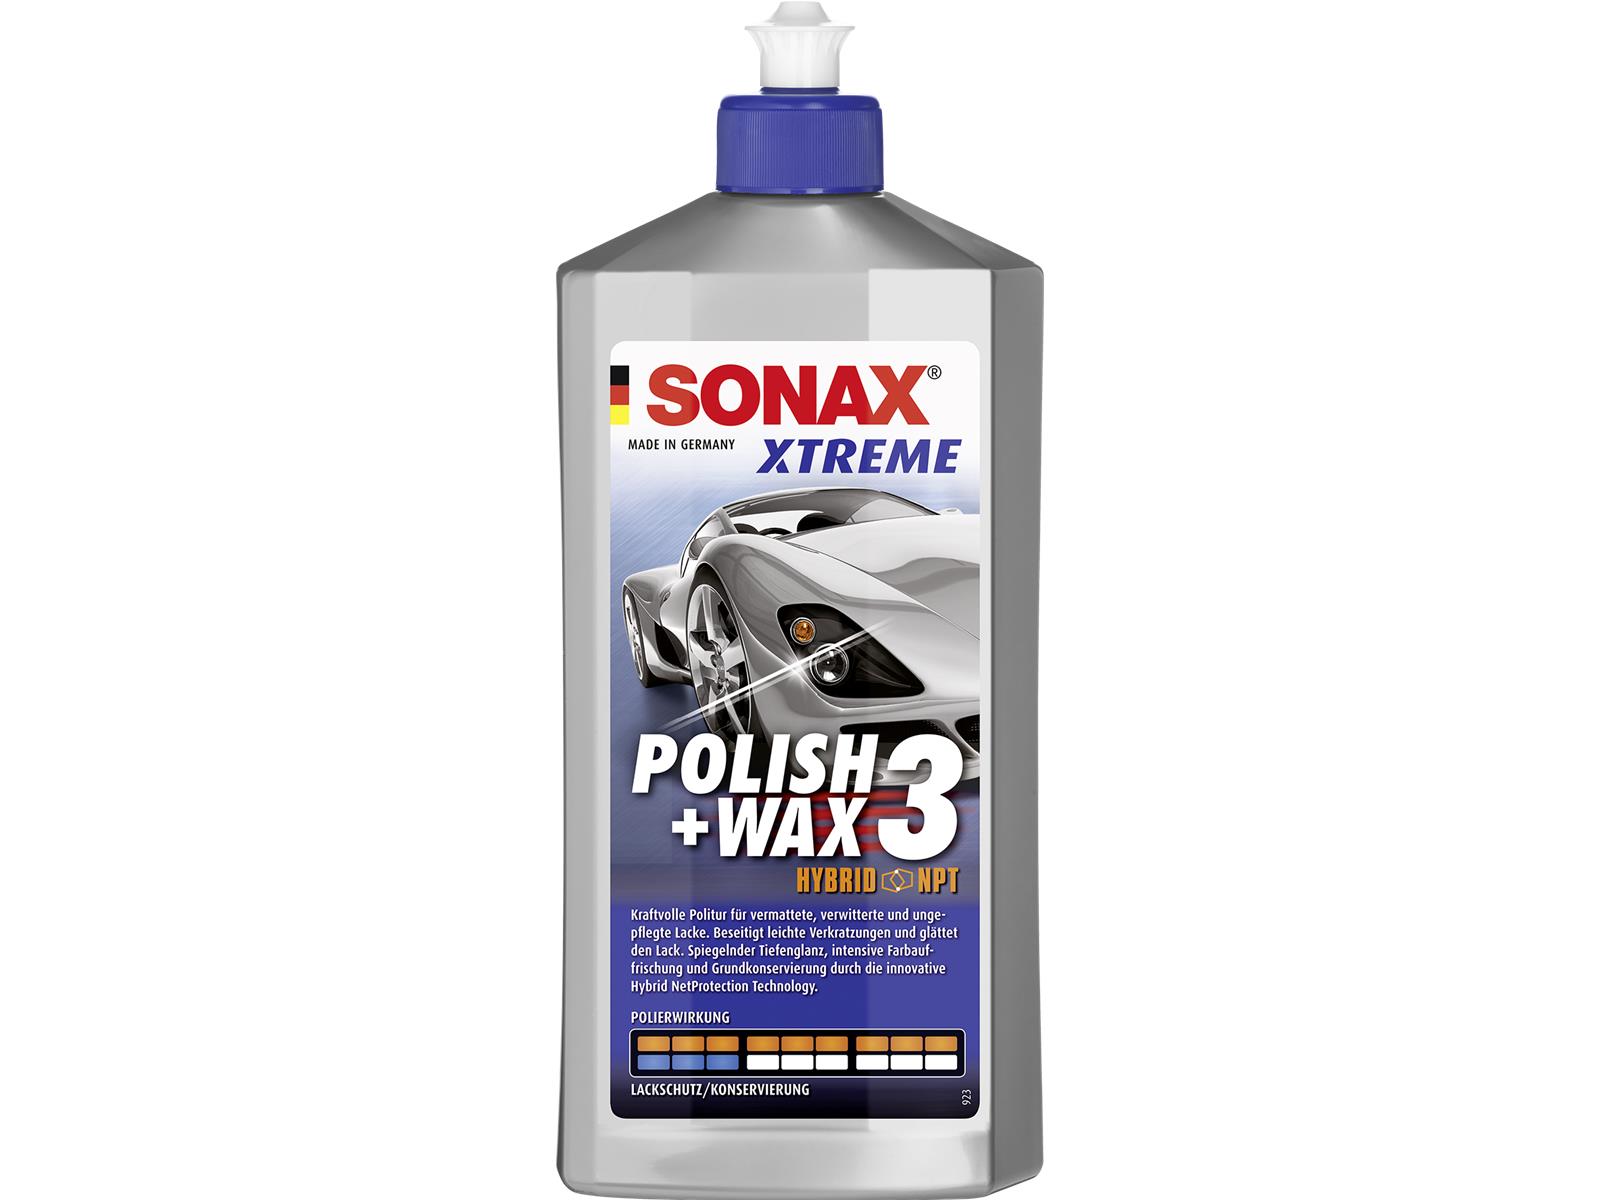 SONAX 02022000 XTREME Polish+Wax 3 Hybrid NPT 500 ml